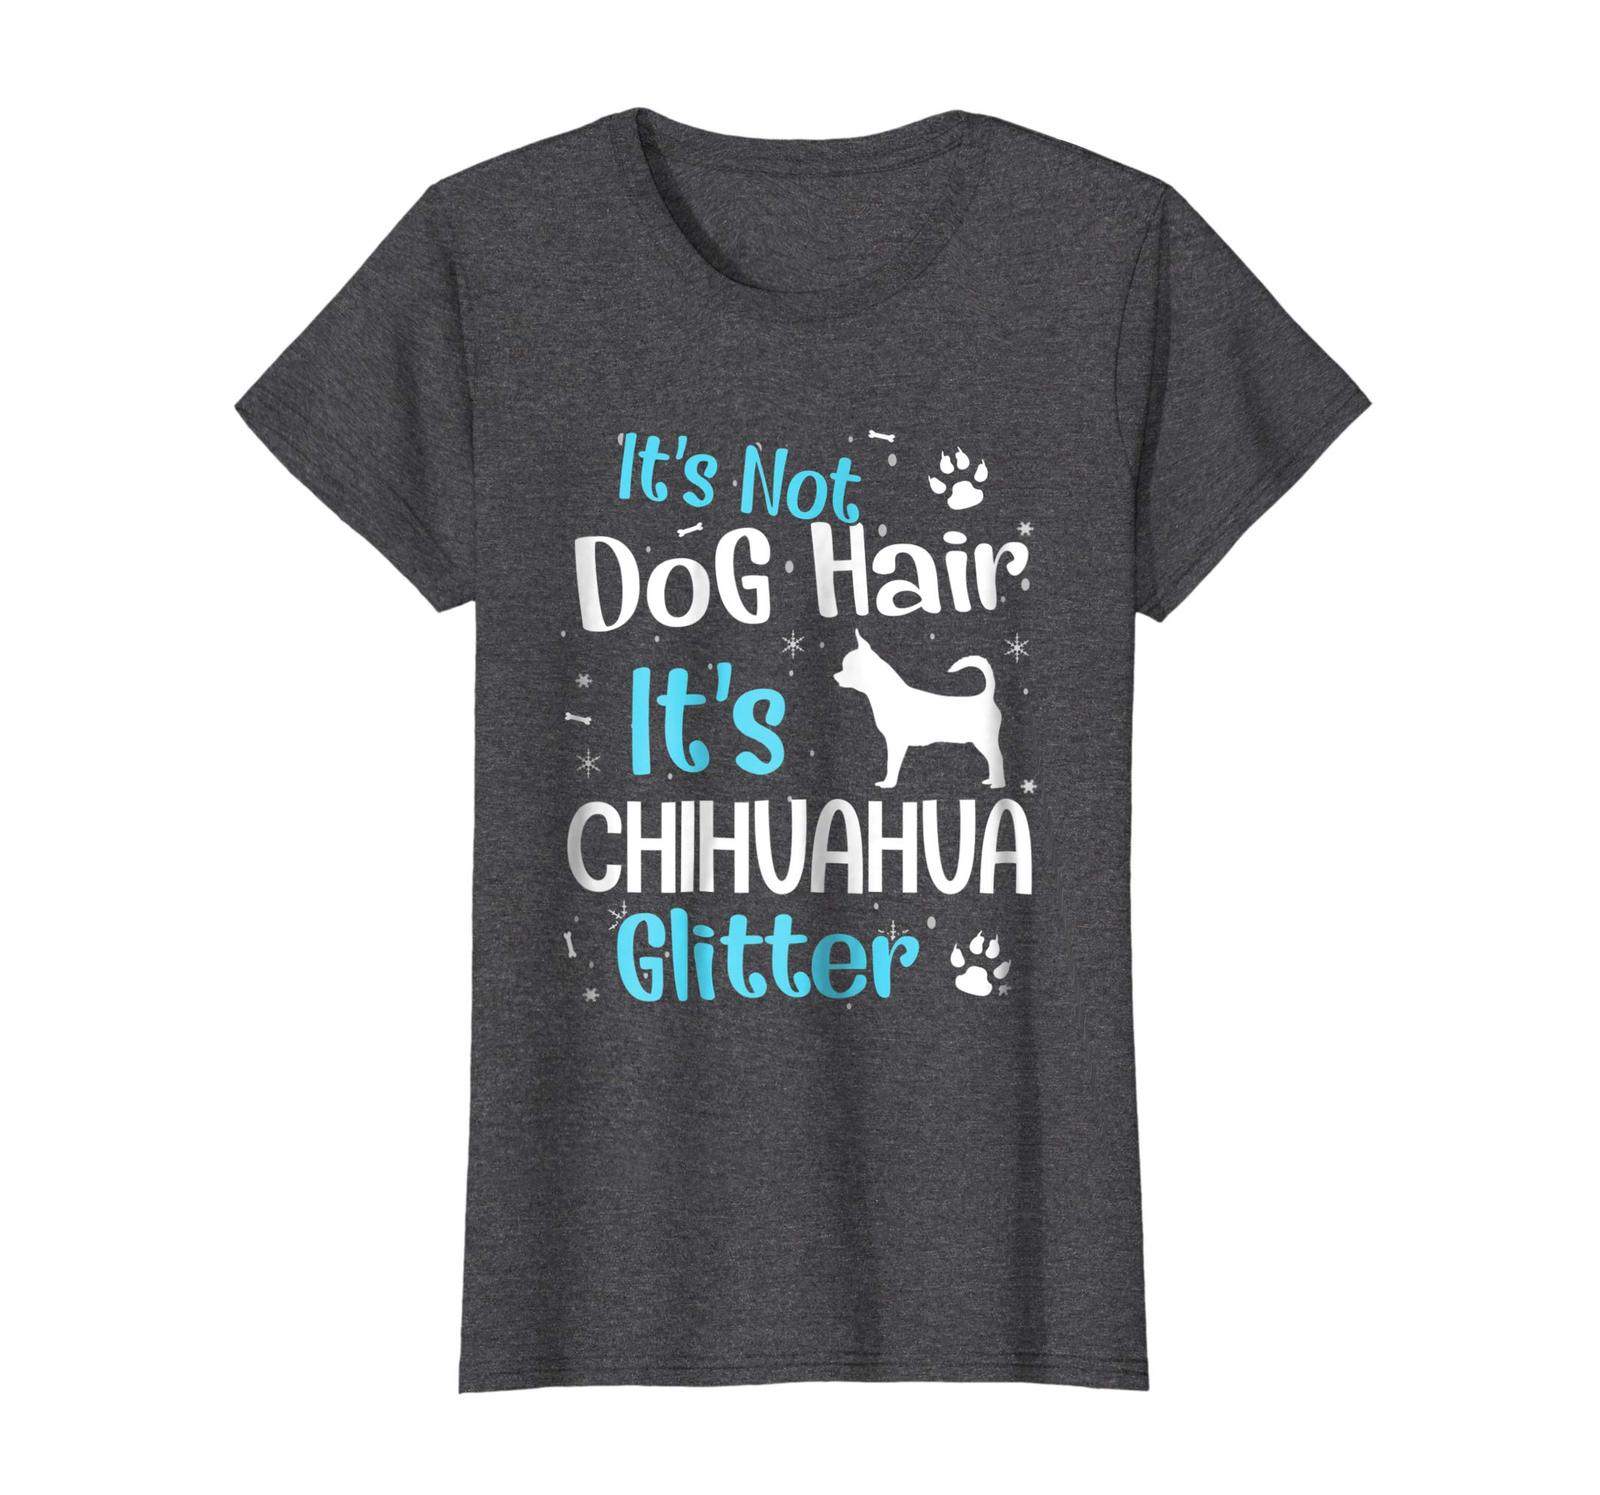 Dog Fashion - It's Not Dog Hair It's Chihuahua Glitter Tee Wowen